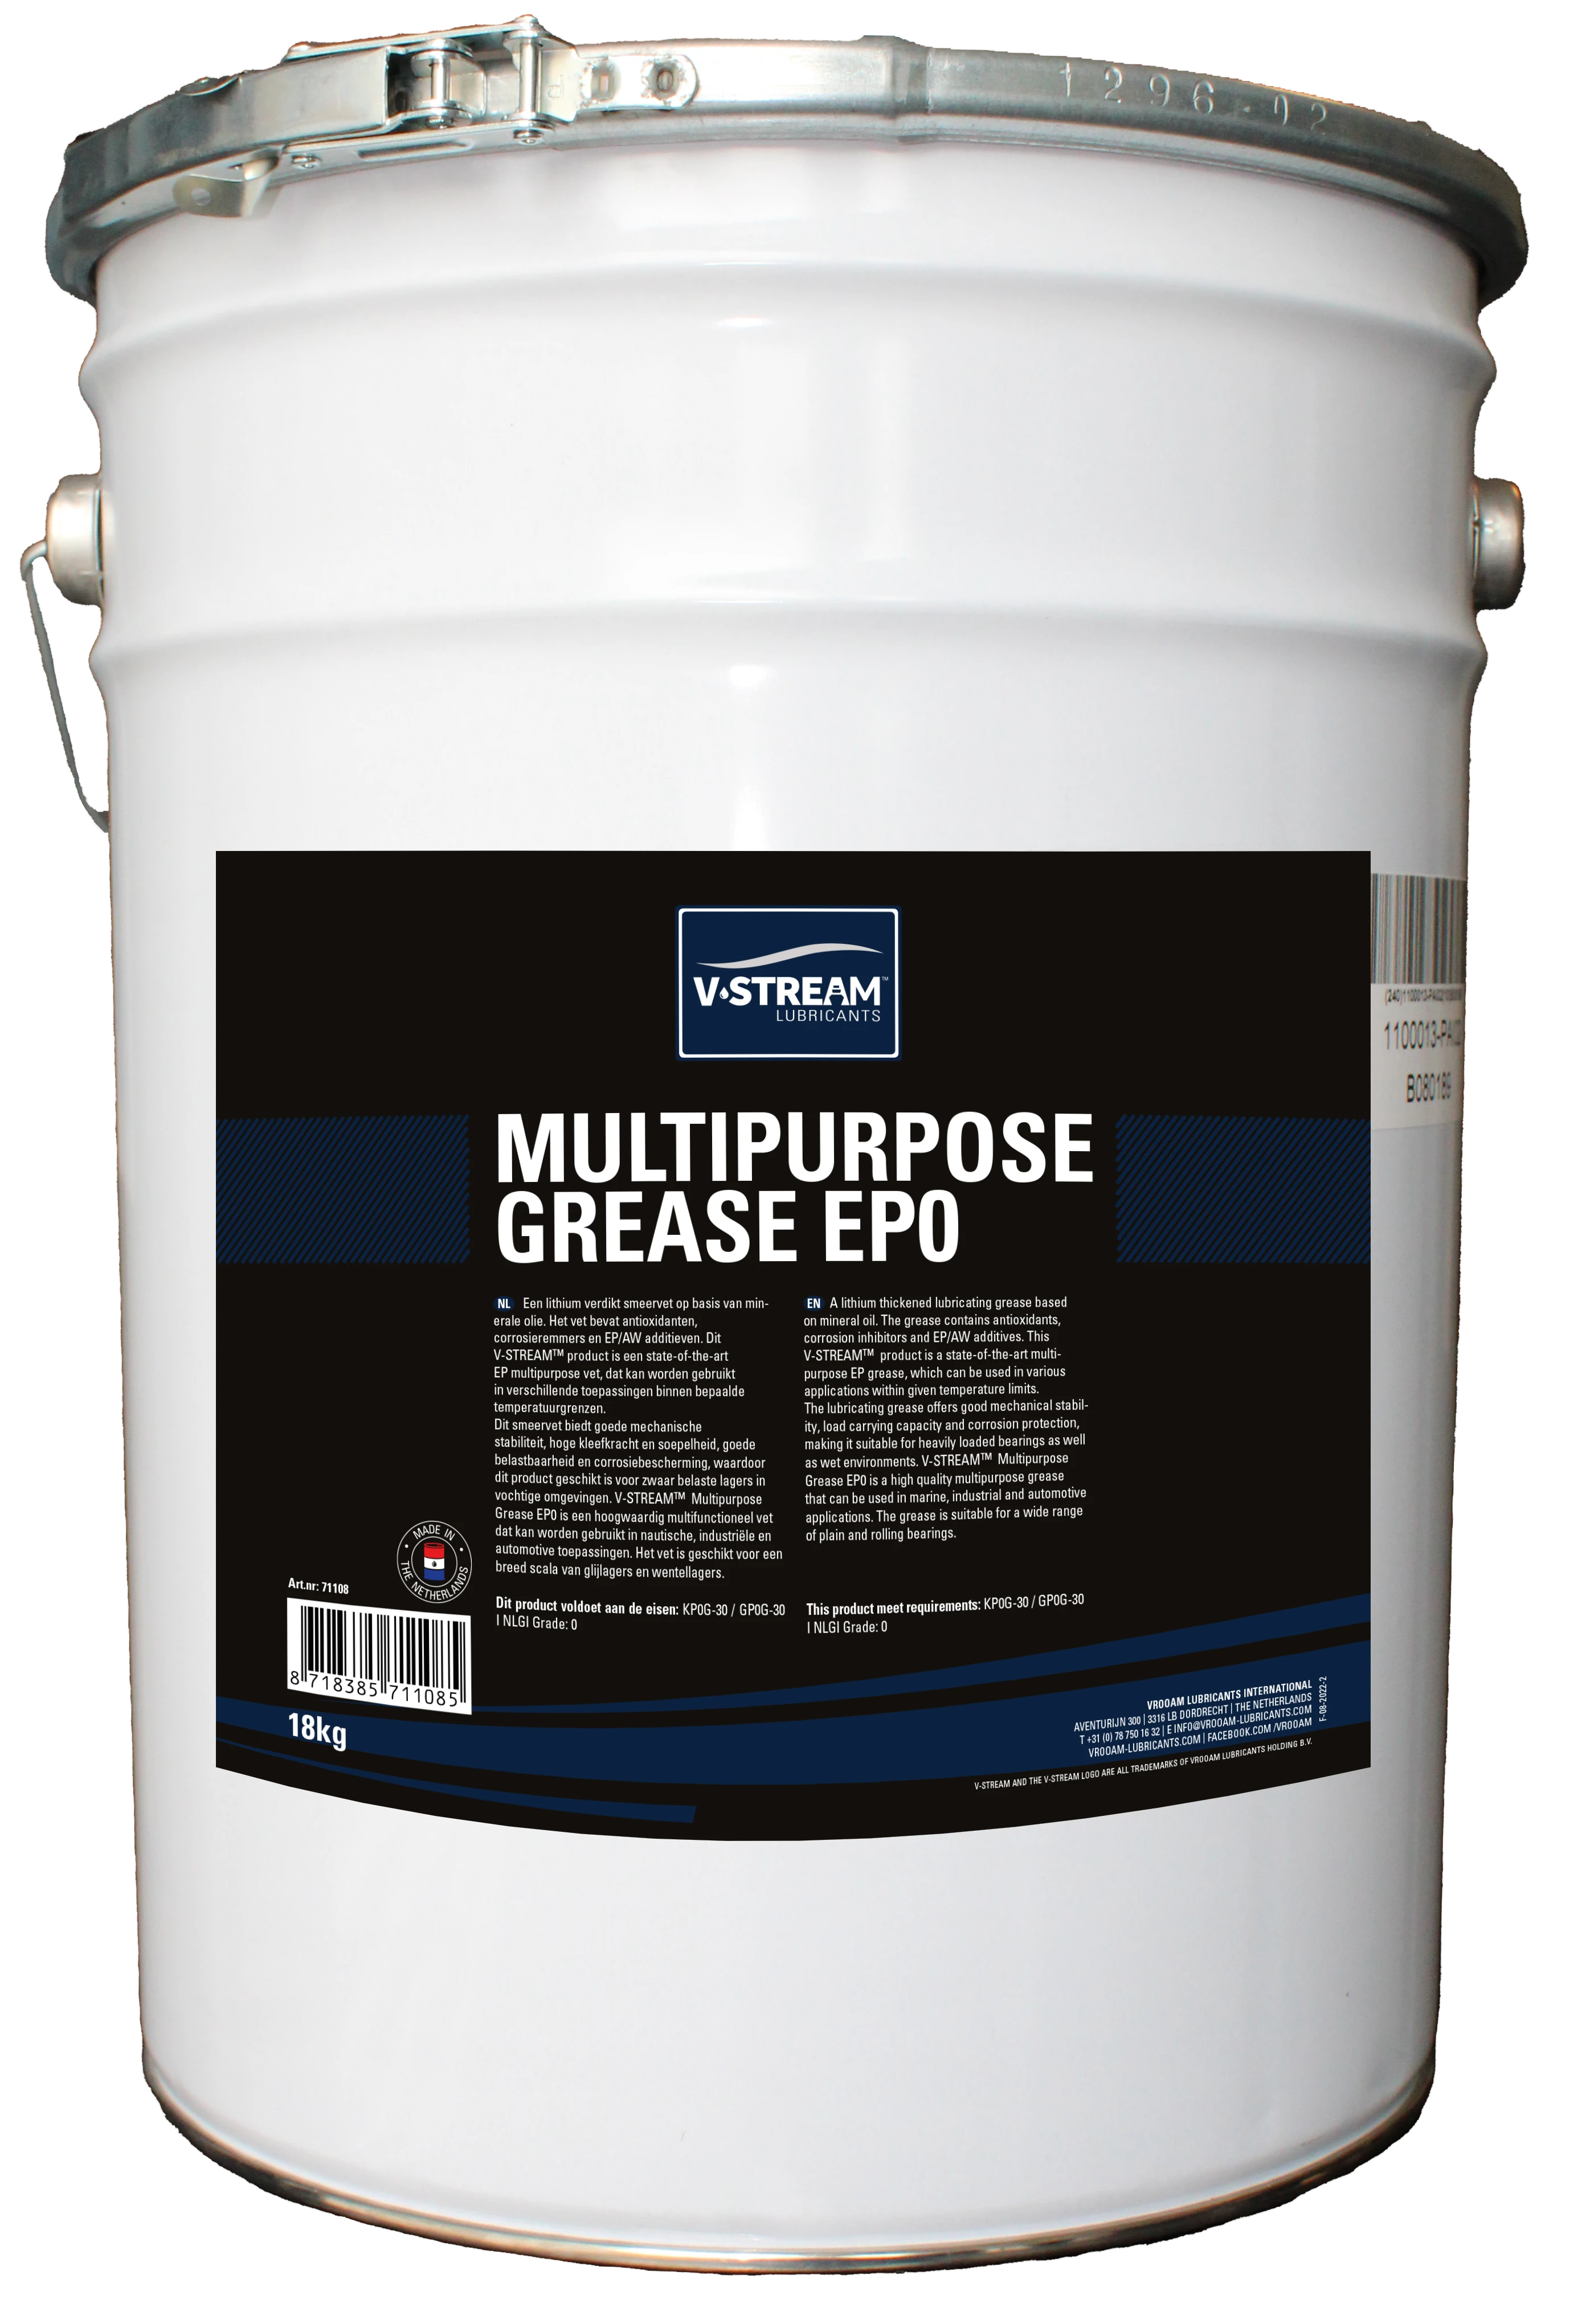 V-STREAM Multipurpose Grease EP0   Inhoud: 18 kg